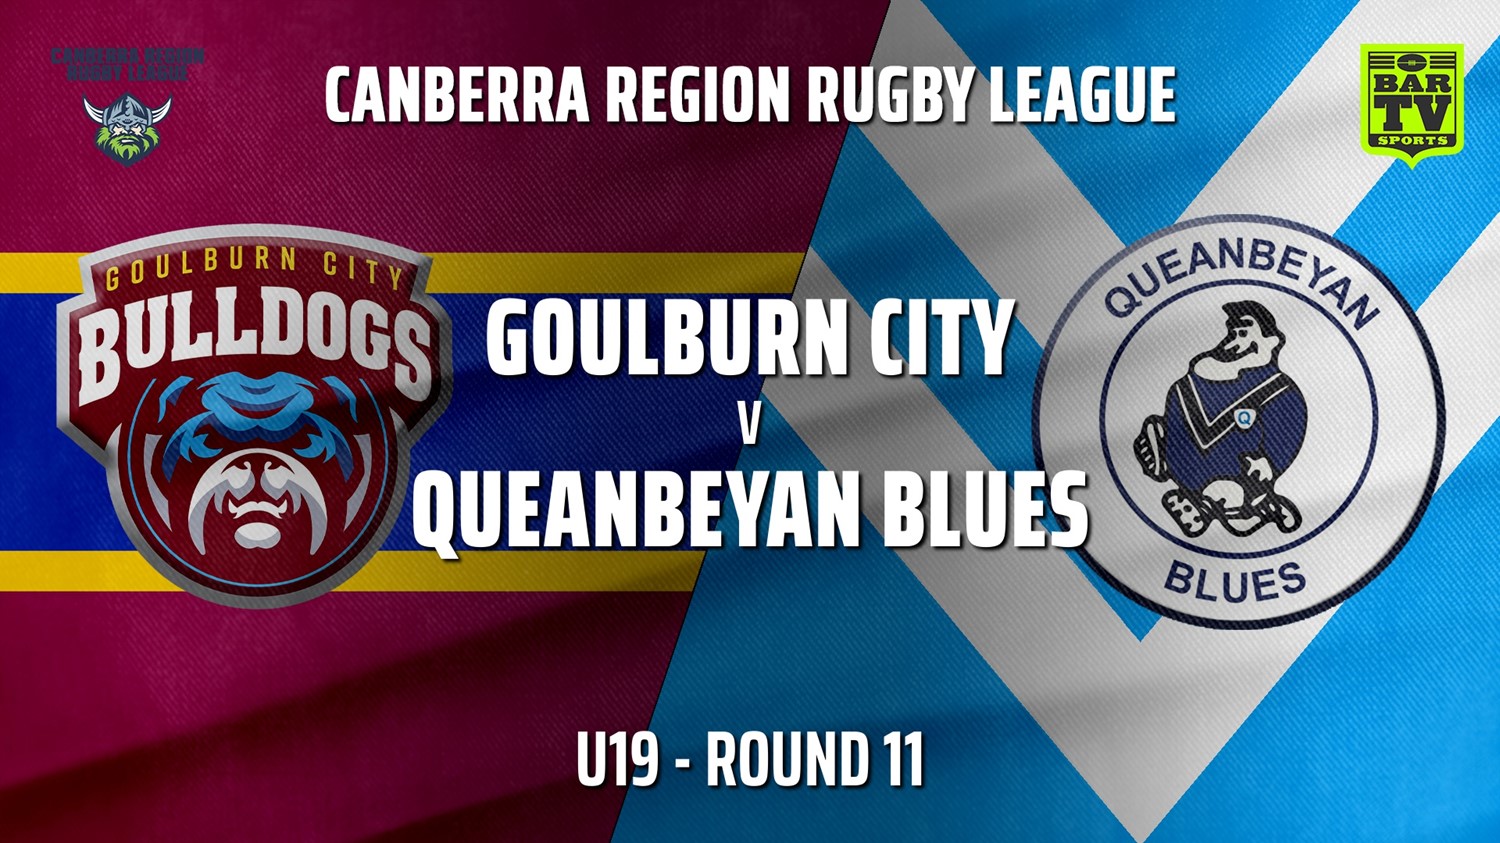 210801-Canberra Round 11 - U19 - Goulburn City Bulldogs v Queanbeyan Blues Slate Image